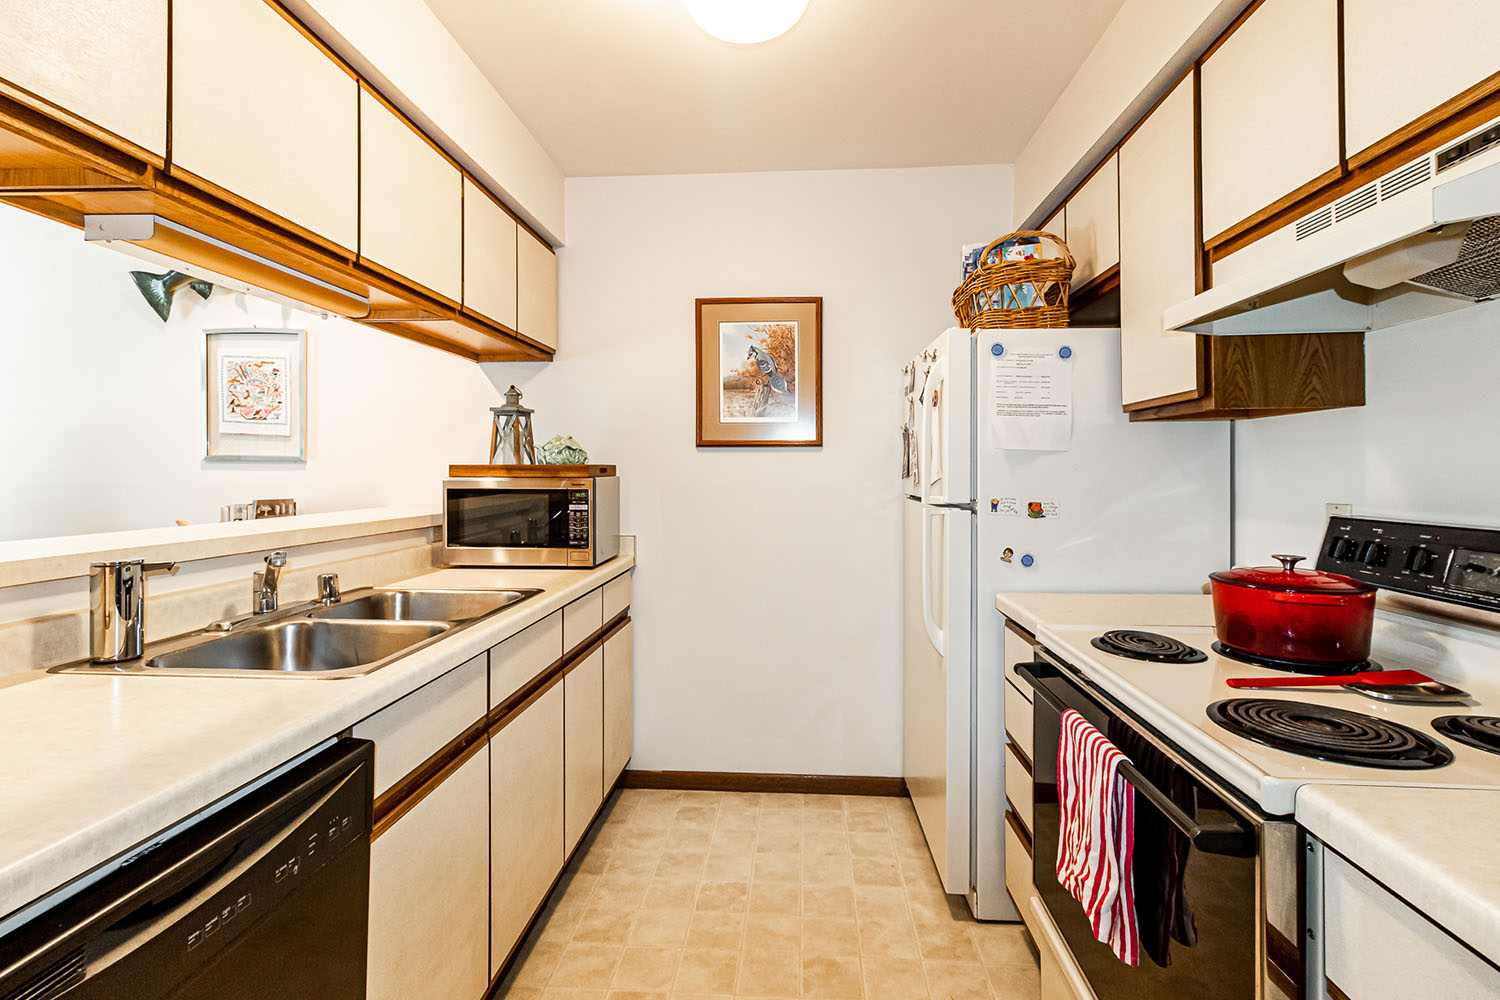 An apartment galley kitchen